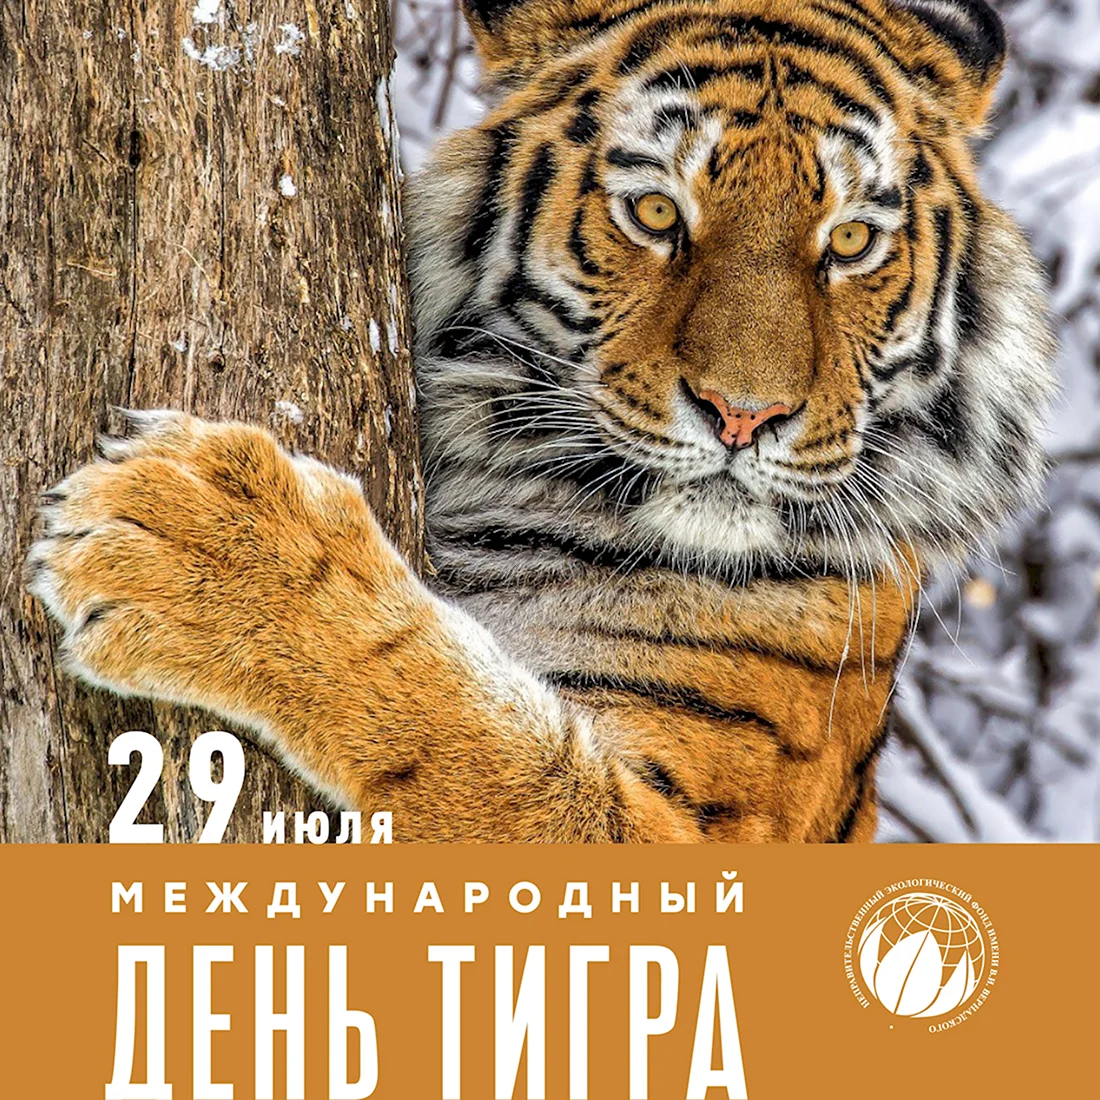 Год тигра 2022. Поздравление на праздник